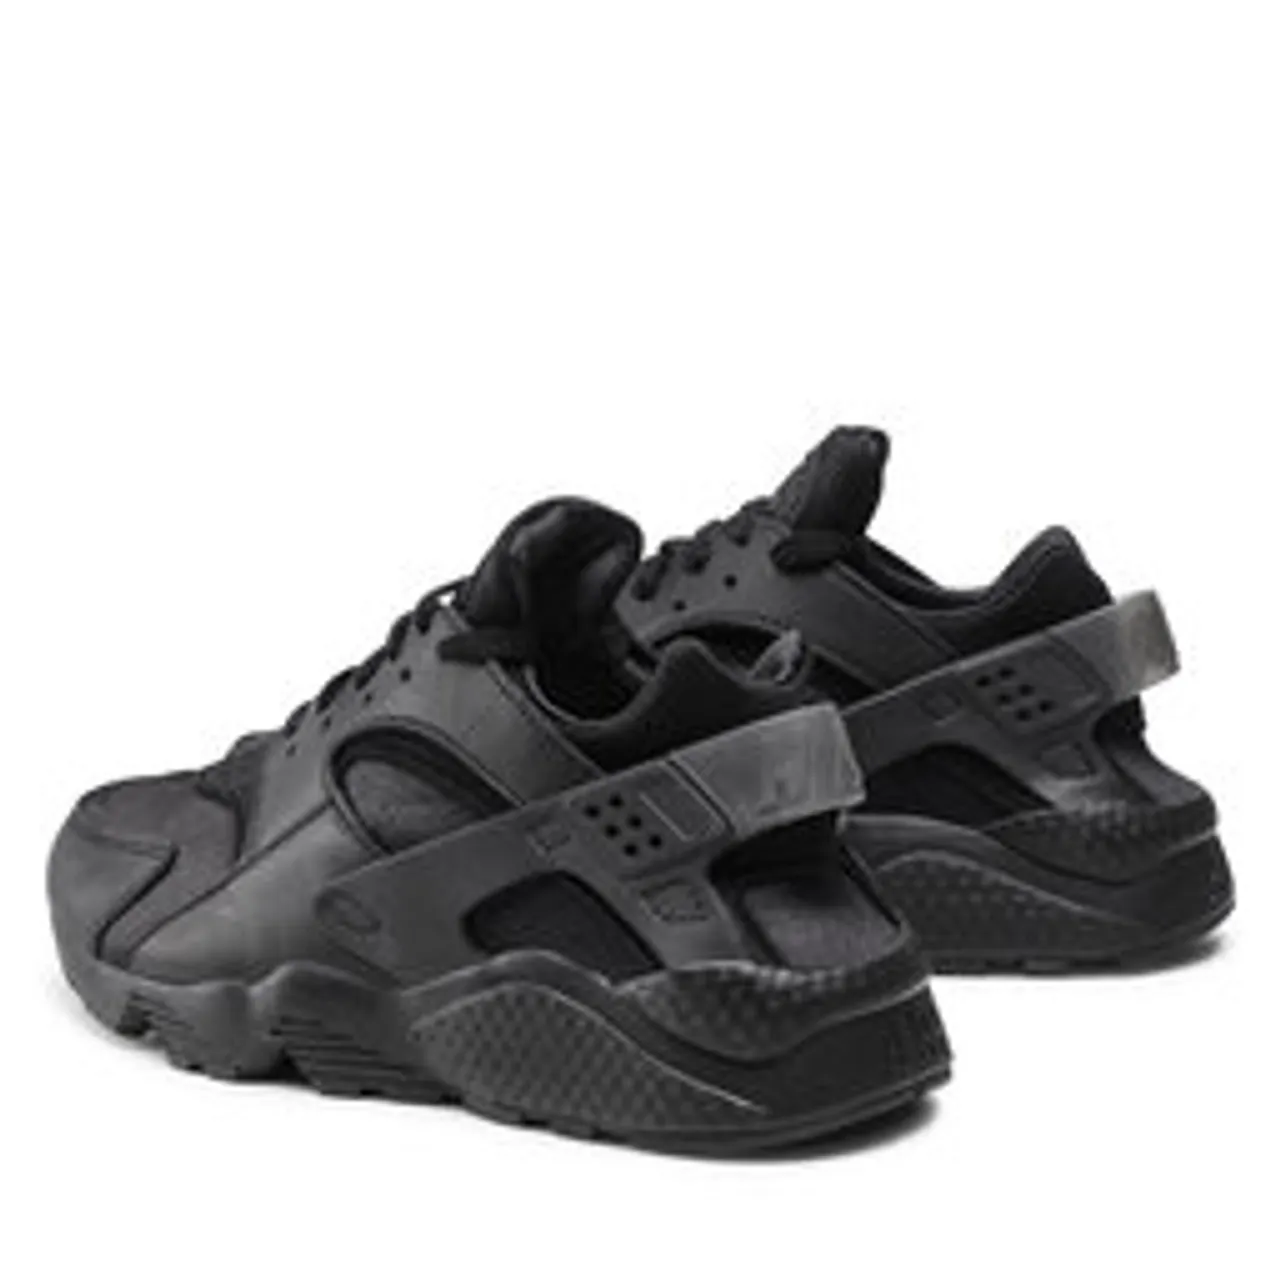 Schuhe Nike Air Huarache DD1068 002 Black/Black/Anthracite